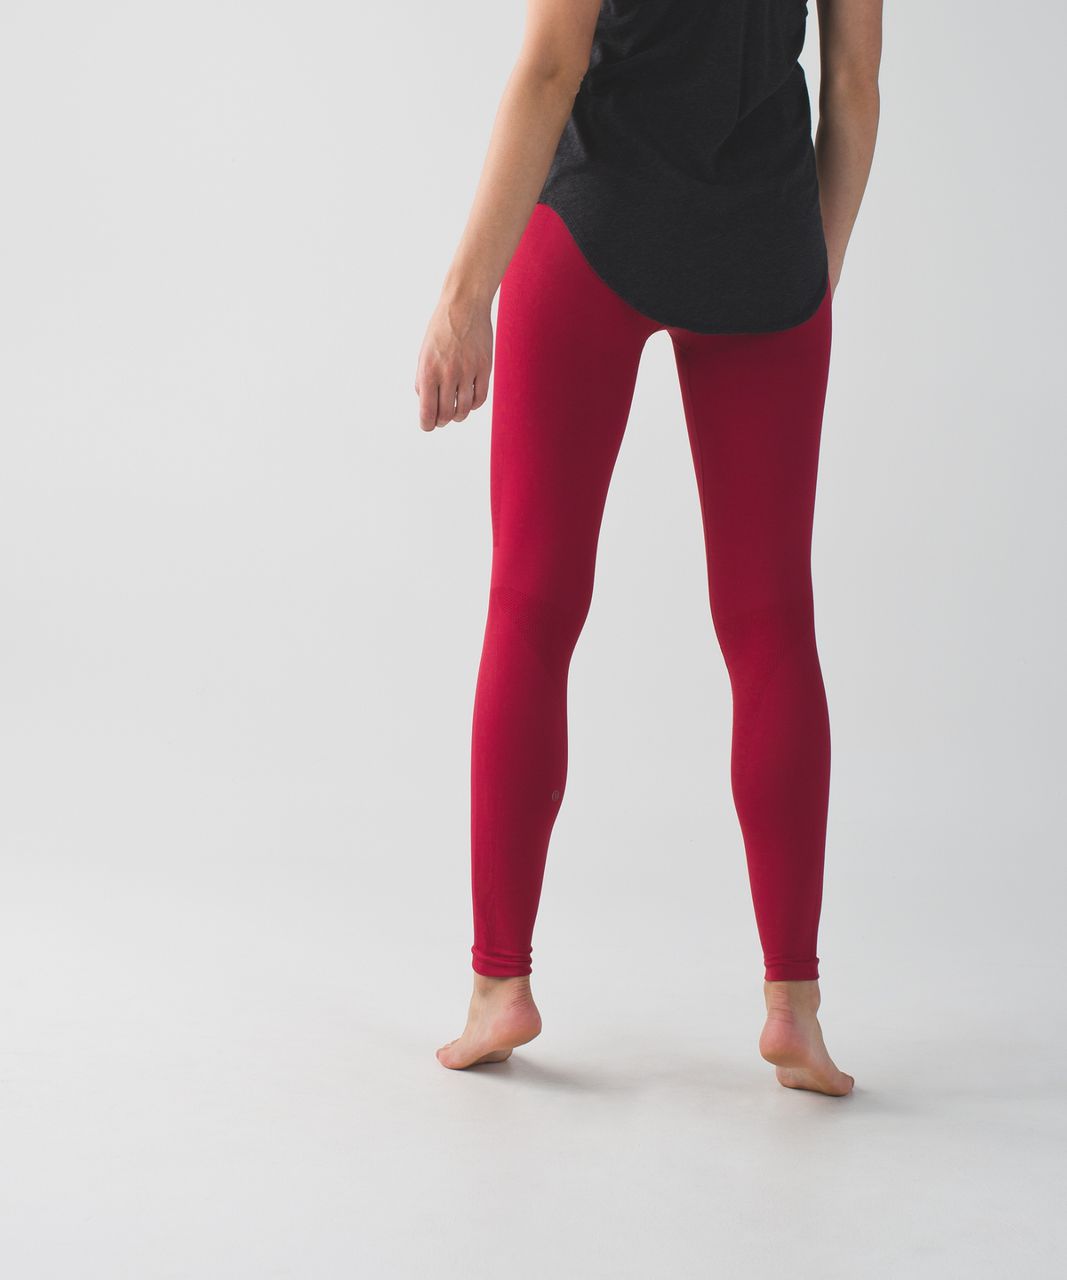 cranberry colored leggings